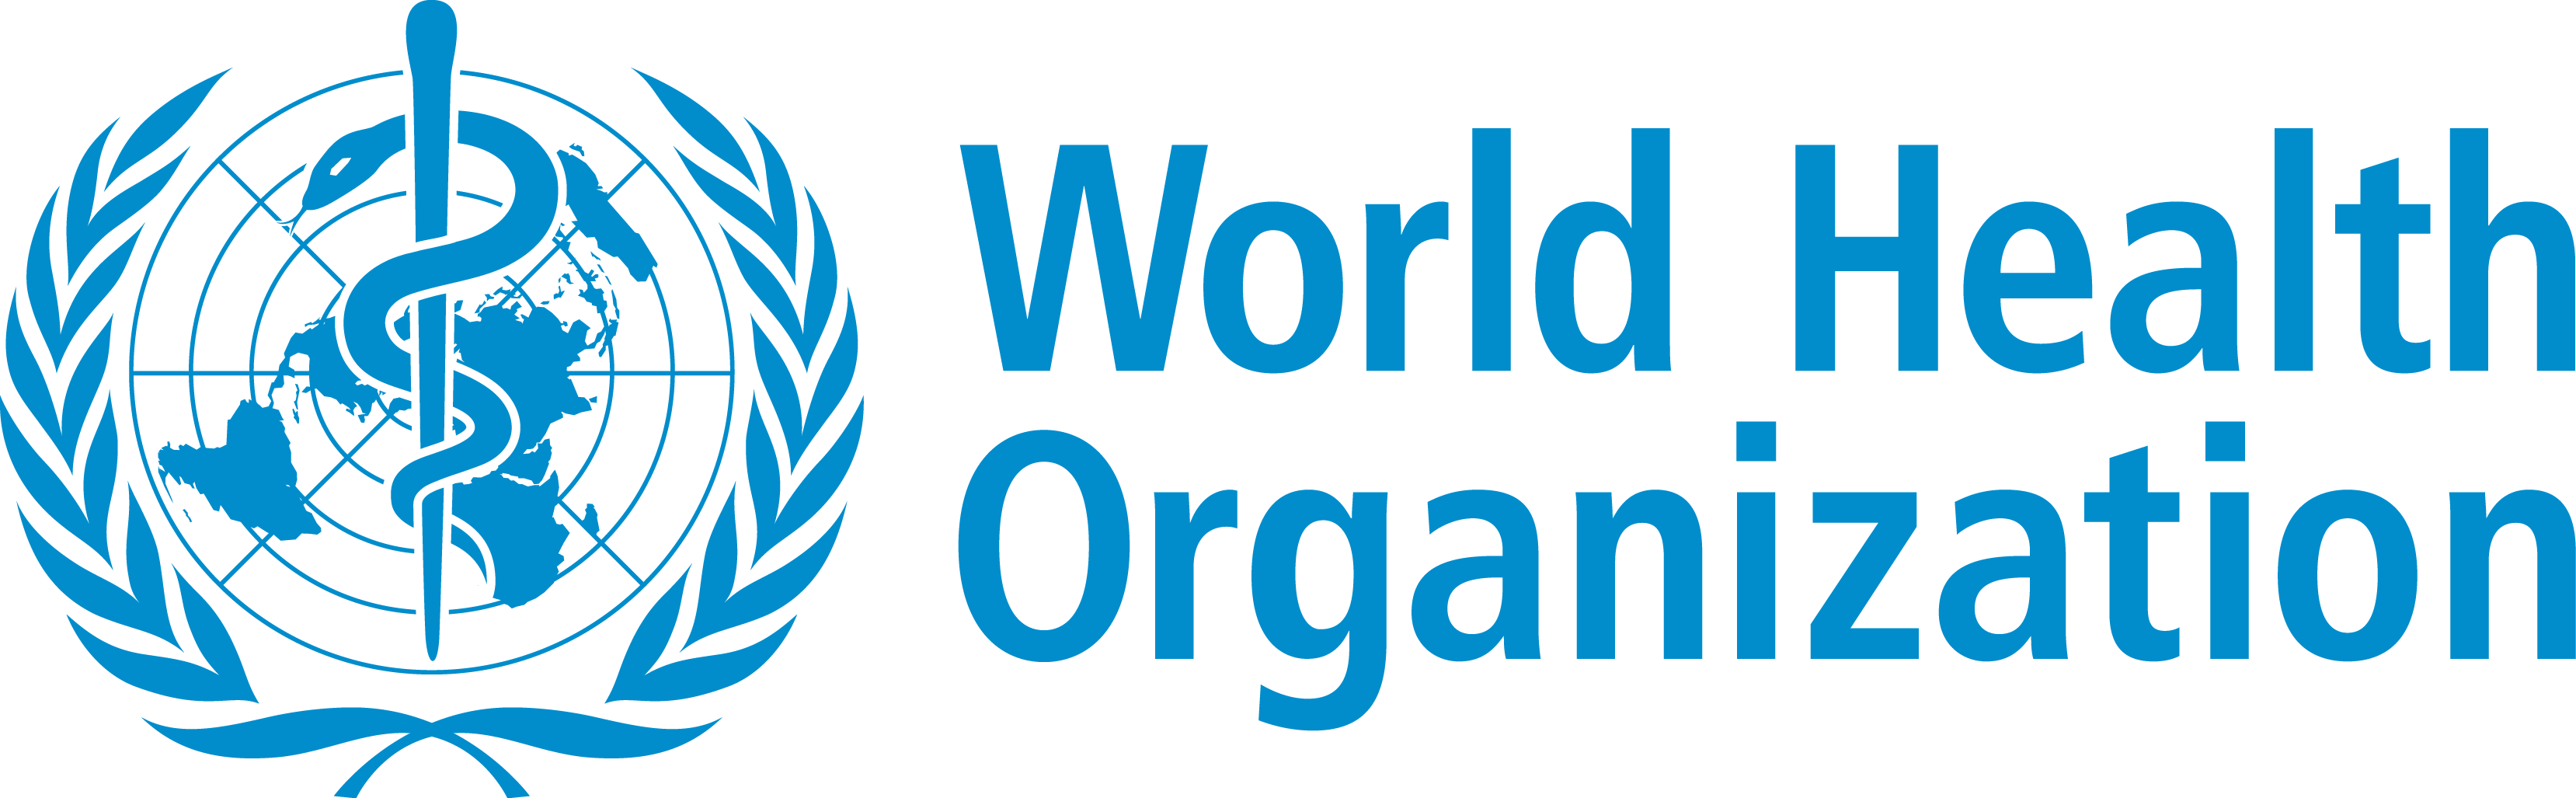 WHO - World Health Organization logo